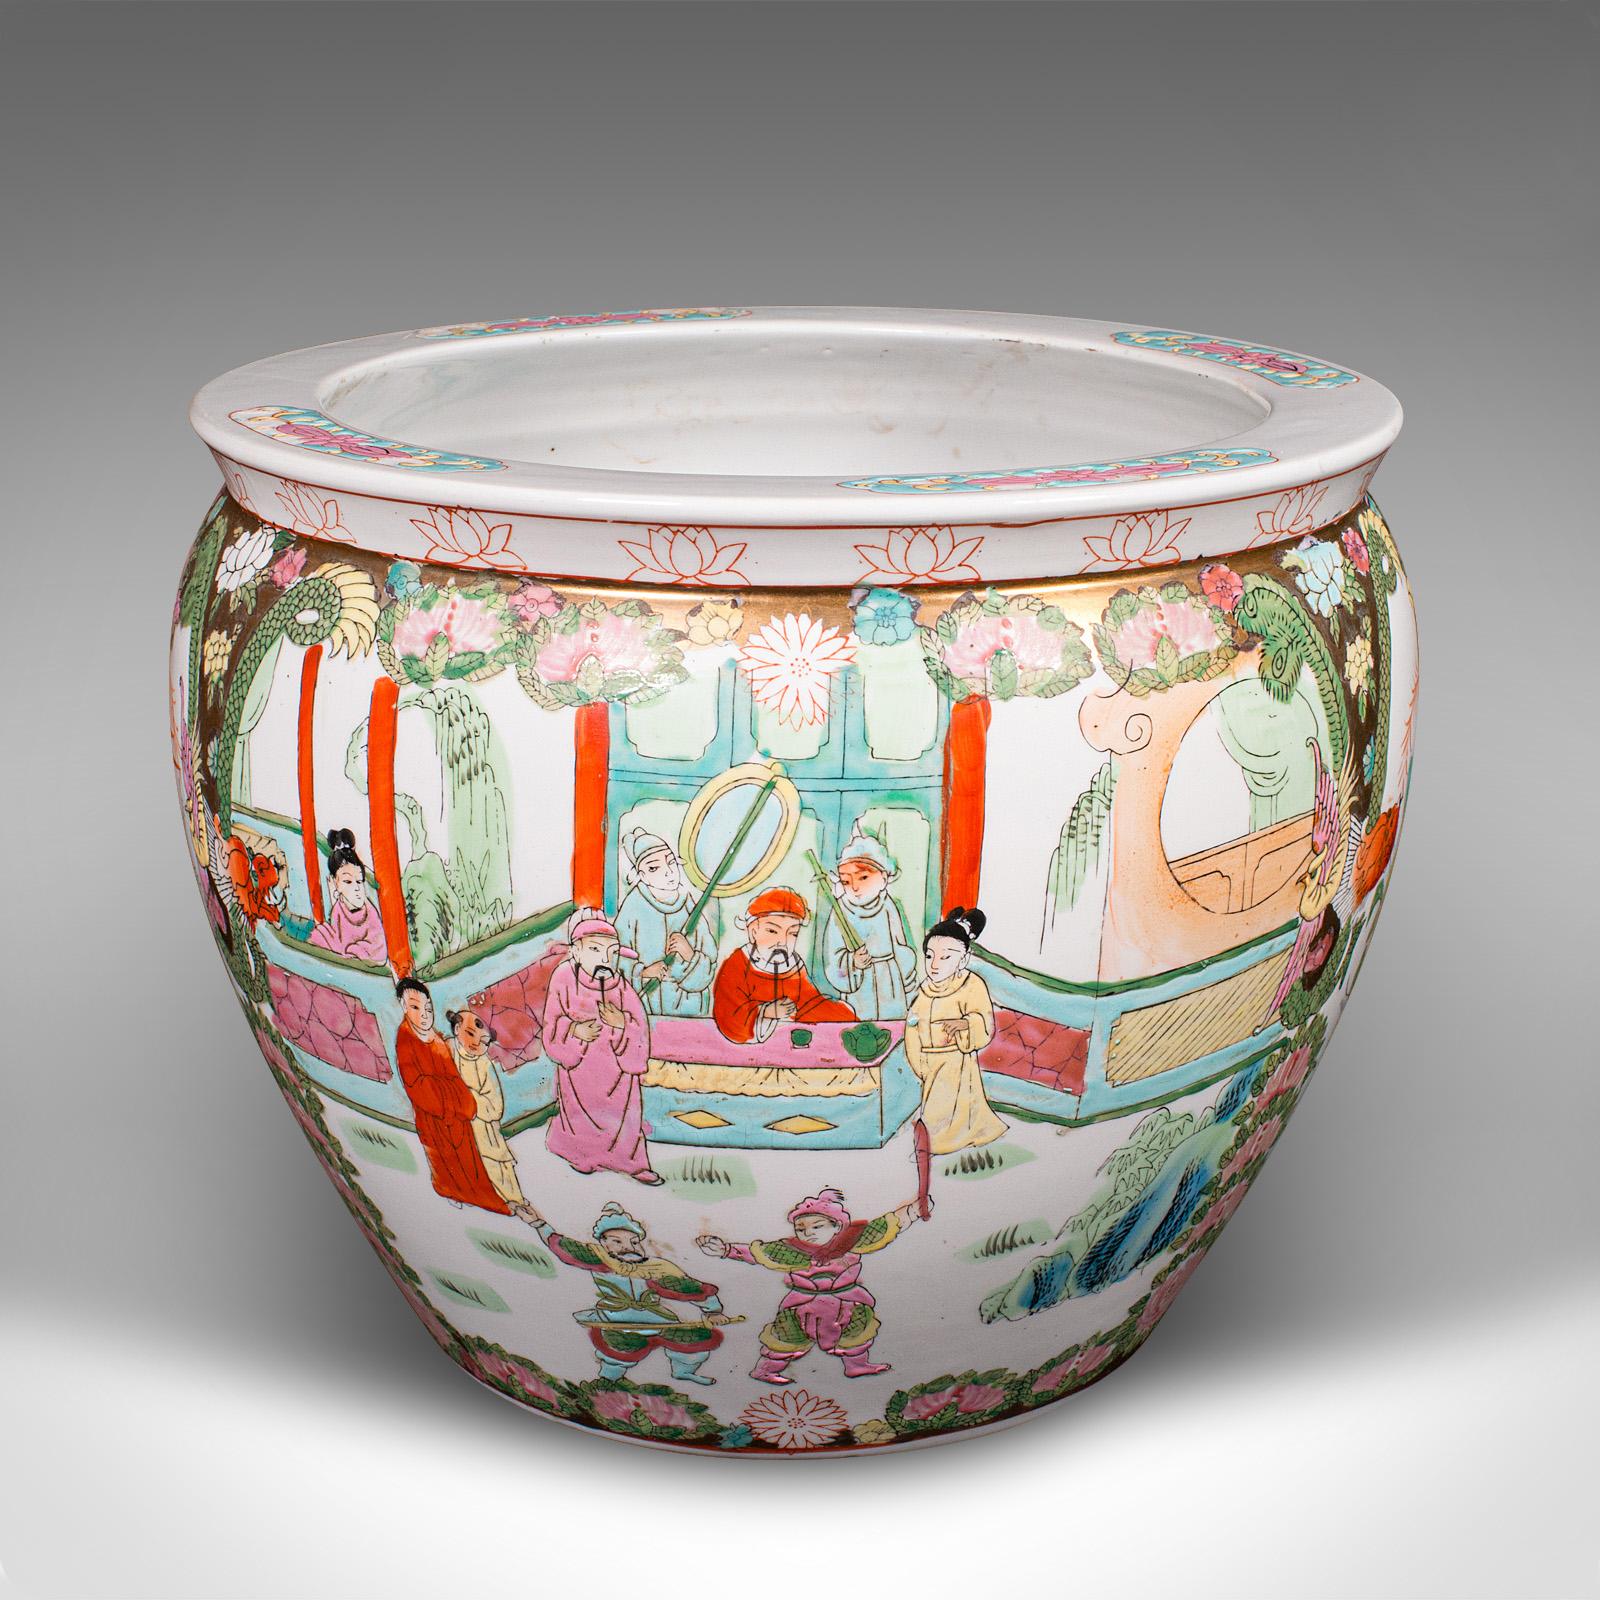 Vintage Decorative Jardiniere, Chinese, Ceramic, Fish Bowl Planter, Art Deco For Sale 1